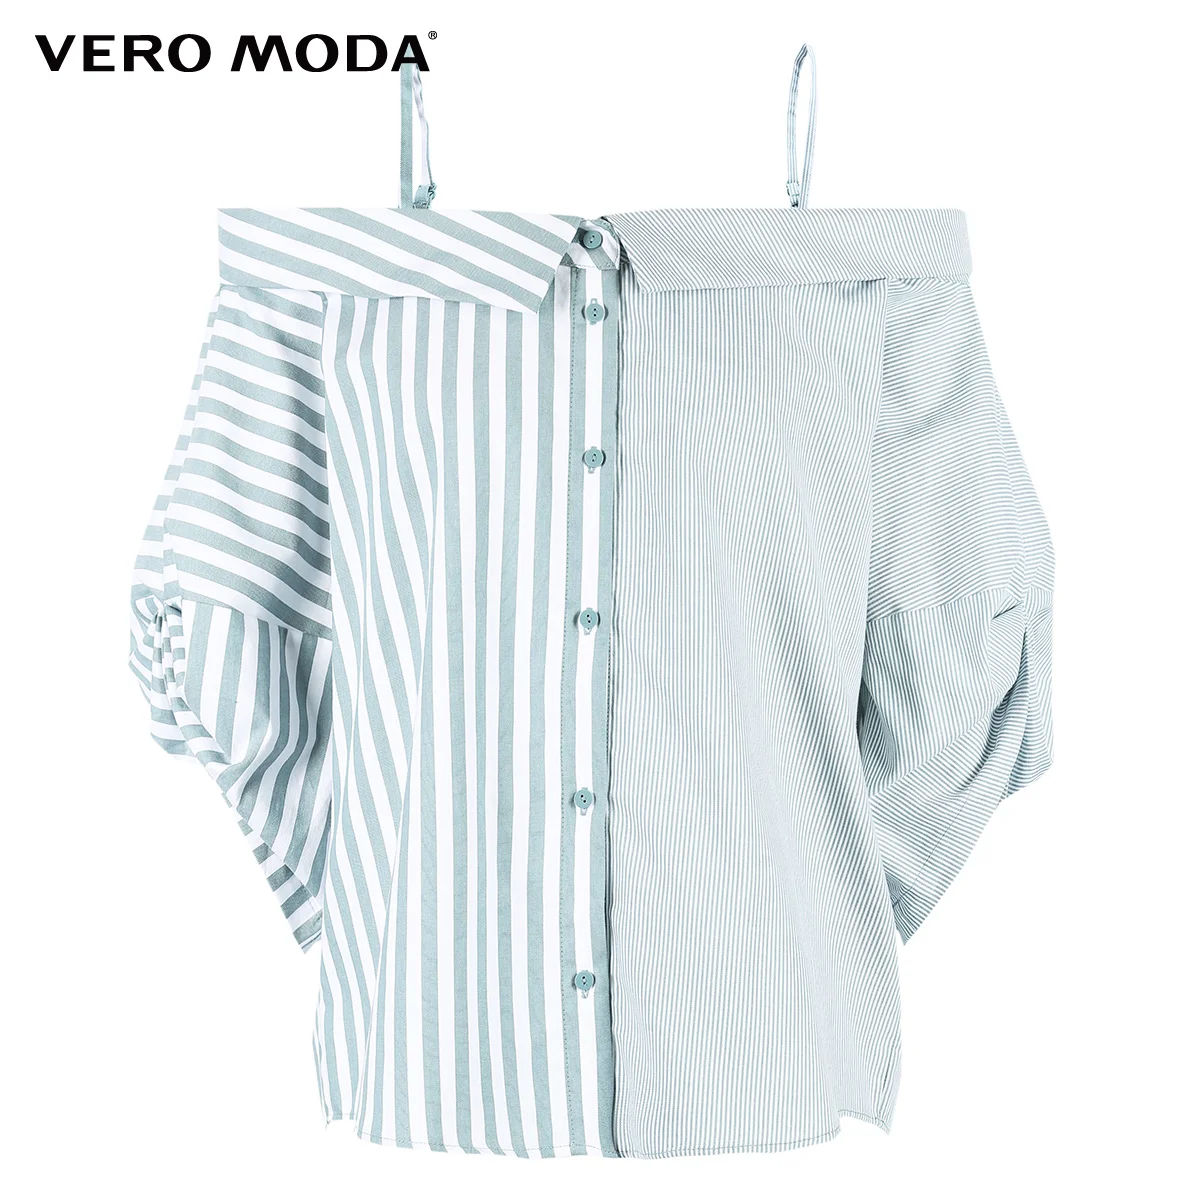  Vero Moda New Women's Stripe Splice Turn-down Collar 3/4 Sleeves Blouse Shirt  318331549